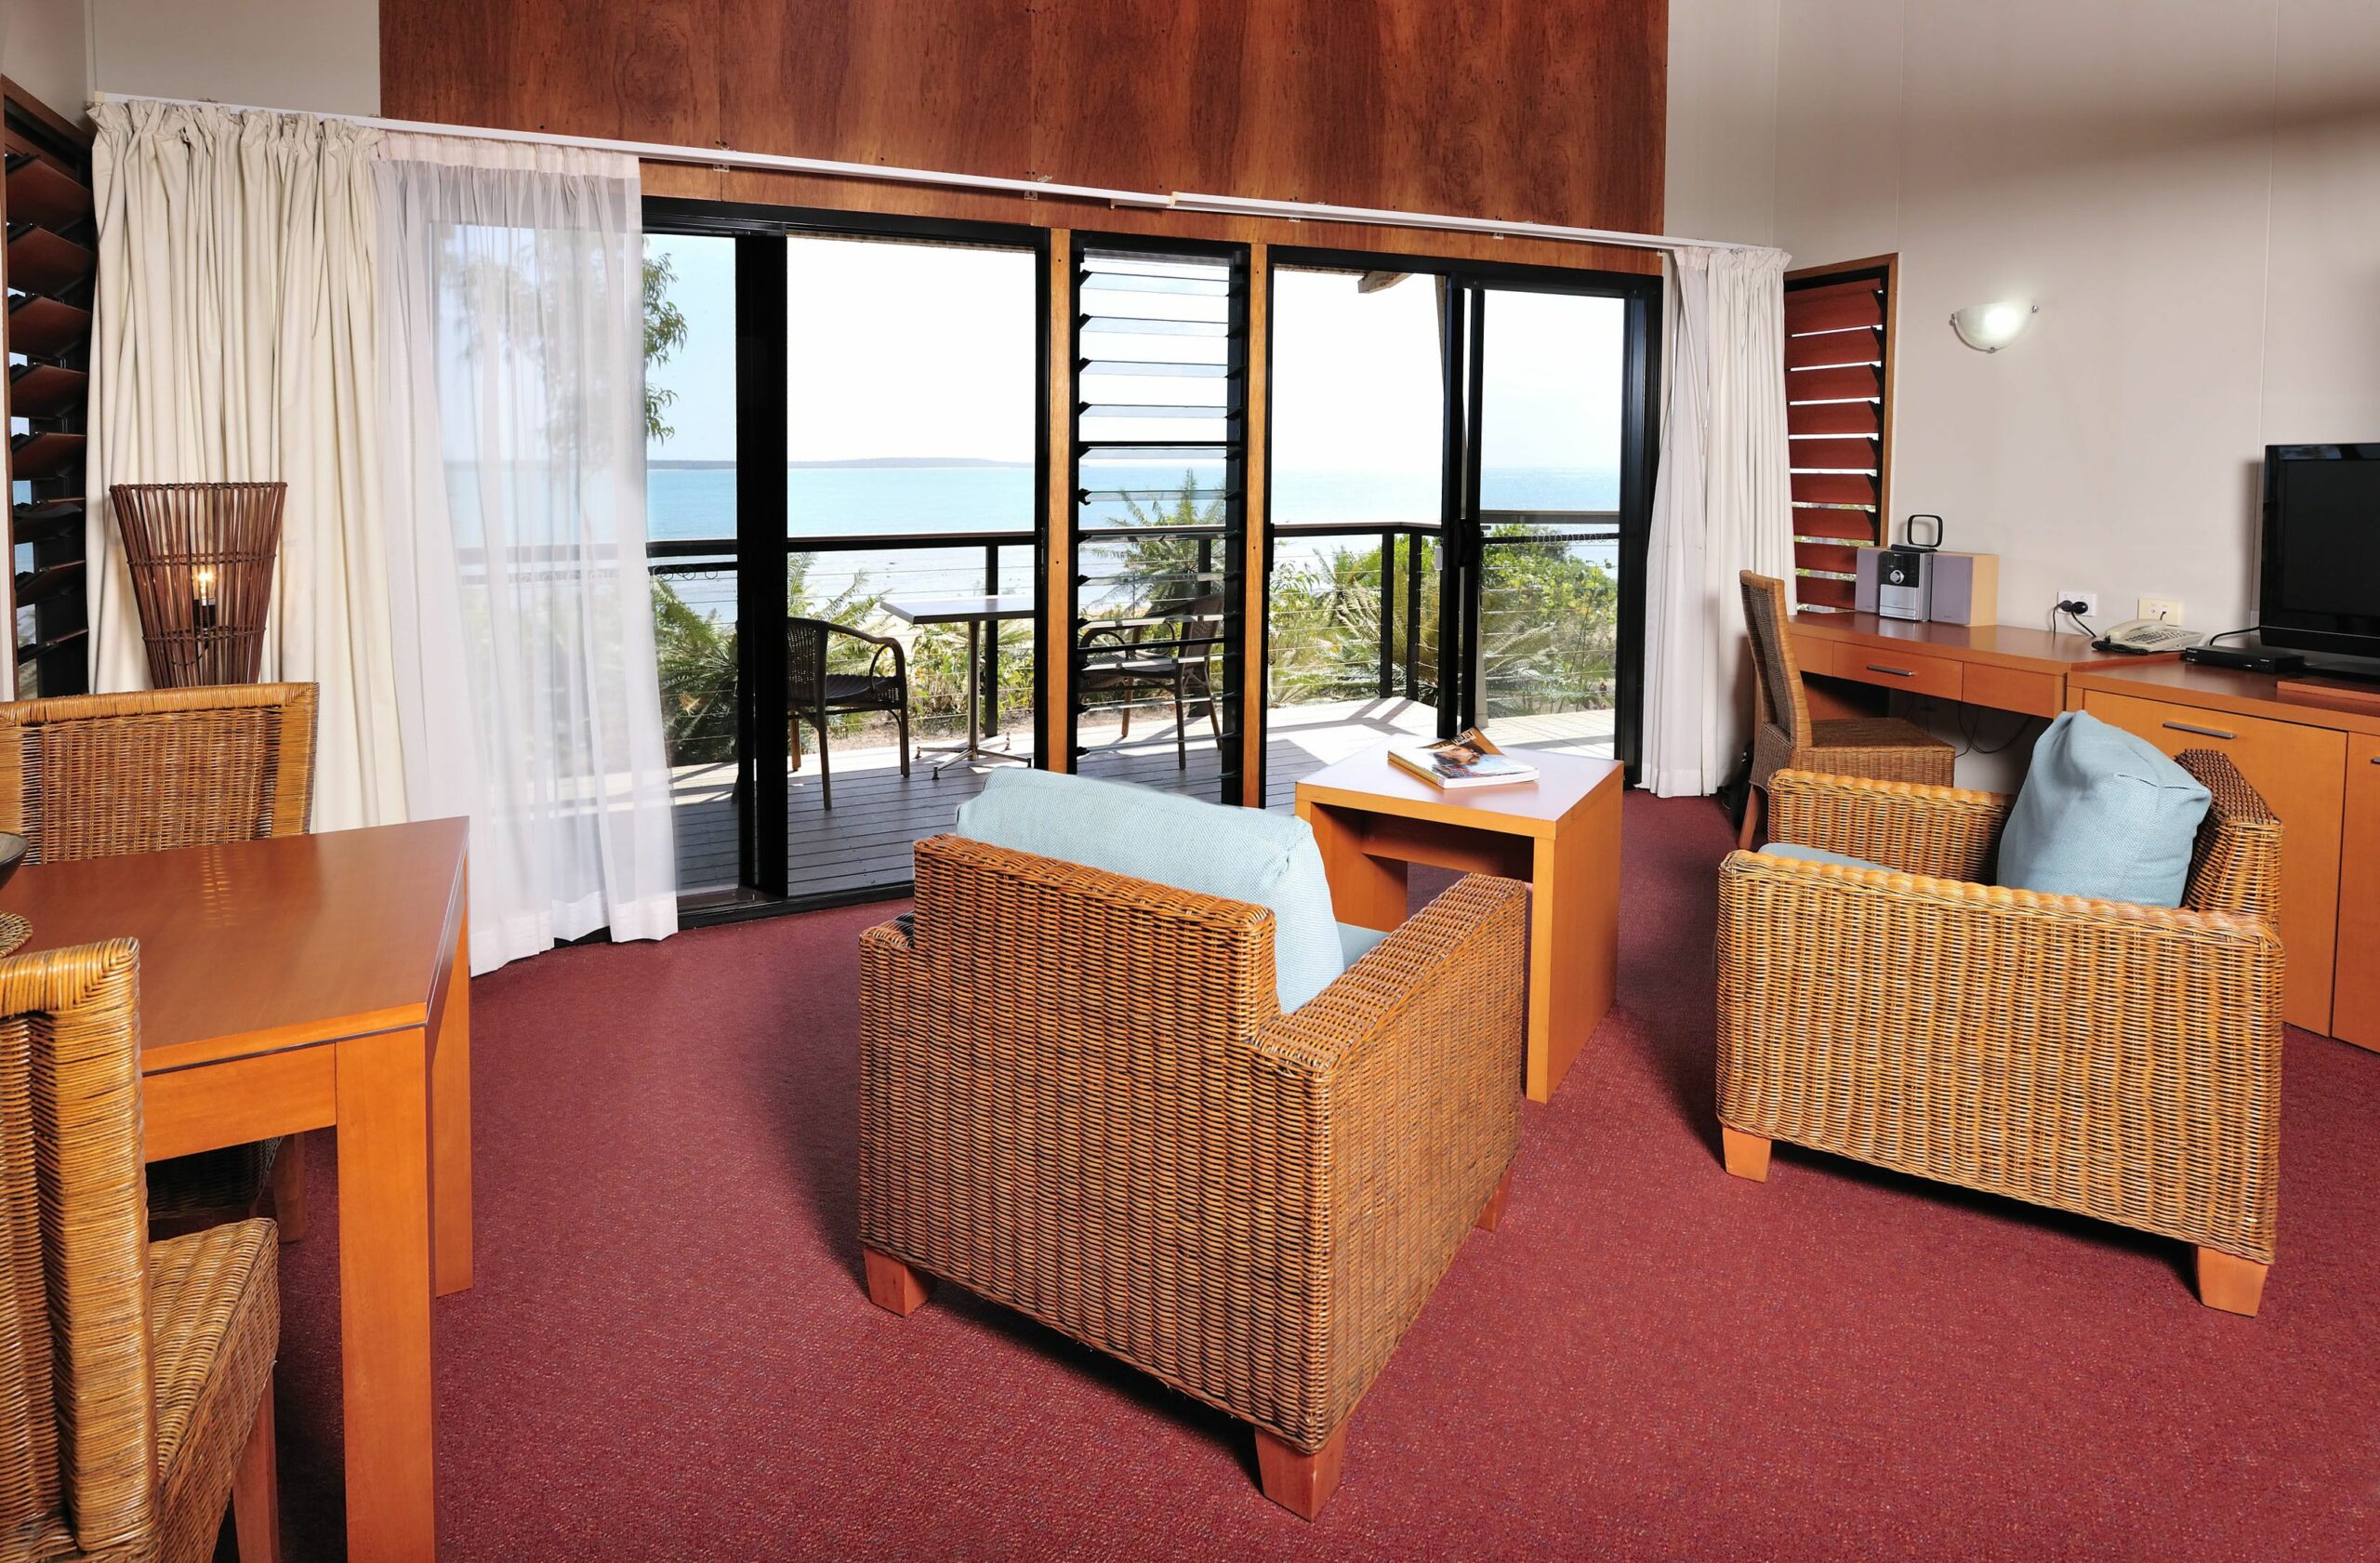 Groote Eylandt Lodge managed by Metro Hotels